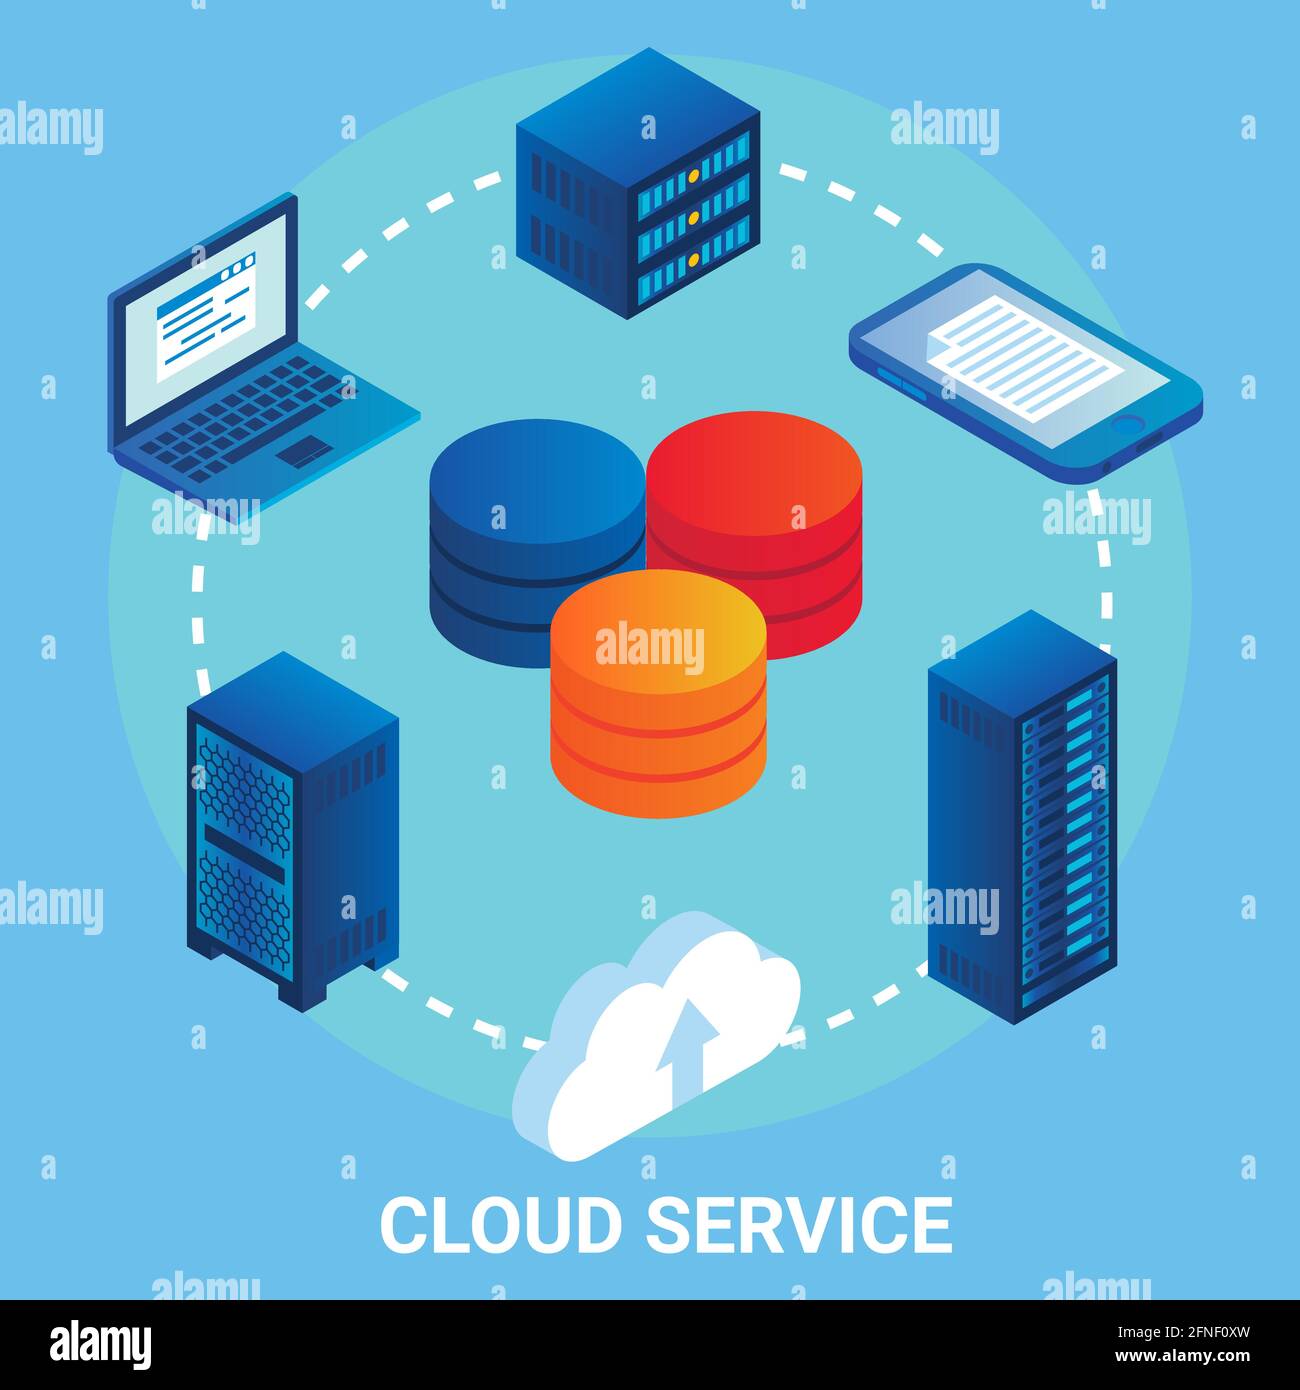 Cloud service flowchart, vector illustration. Isometric laptop computer, mobile phone, cloud computing server racks. Stock Vector